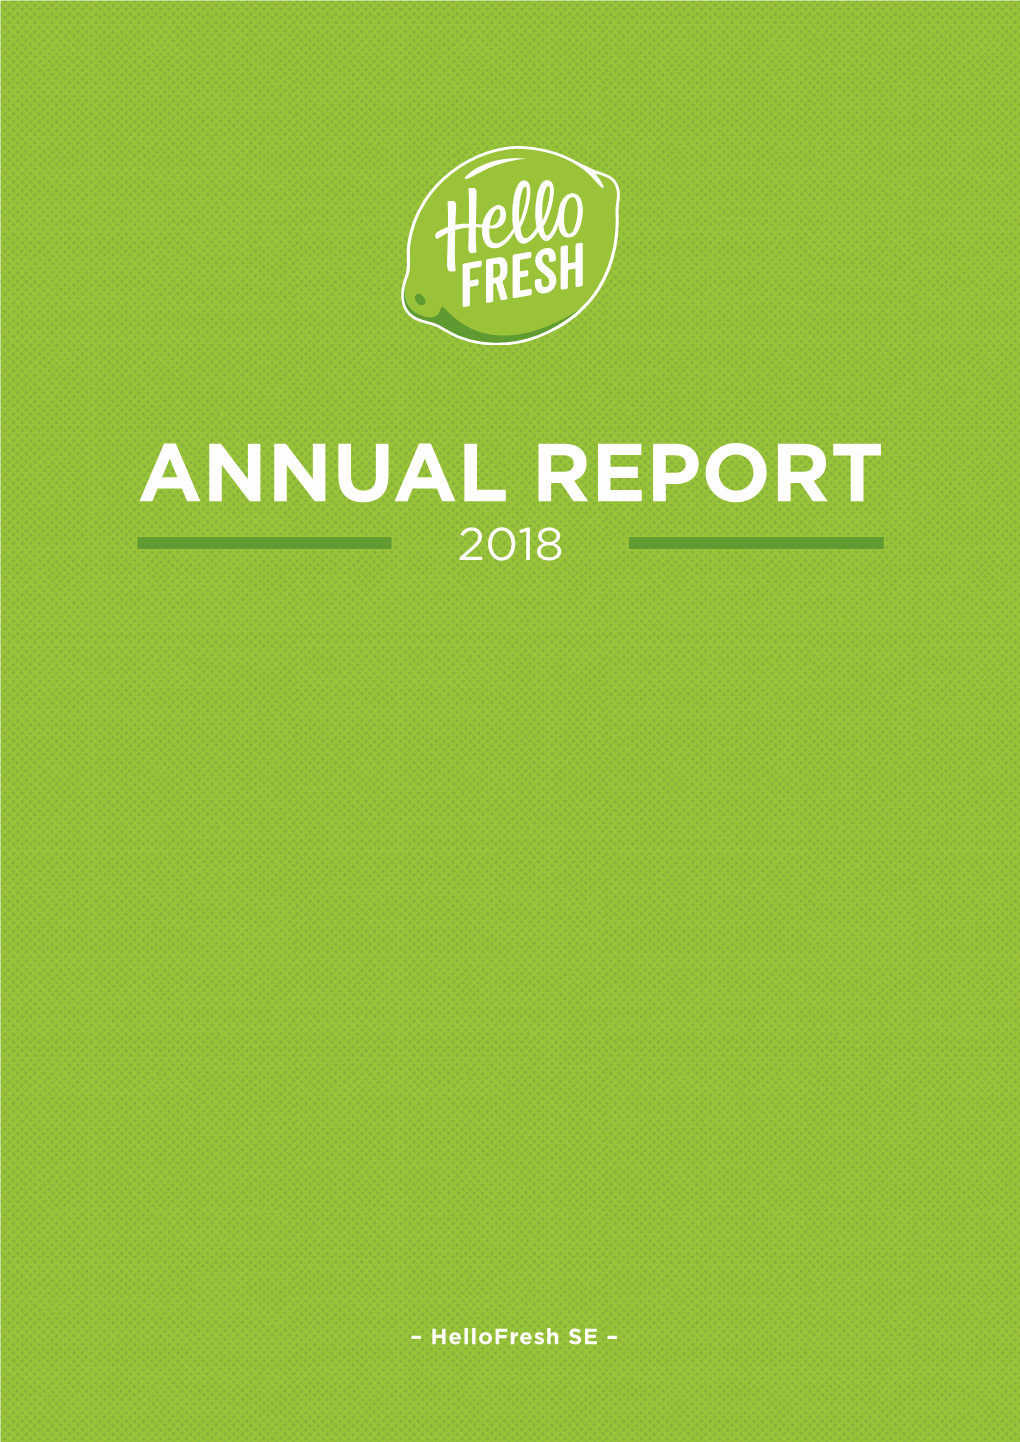 Hellofresh Annual Report 2018